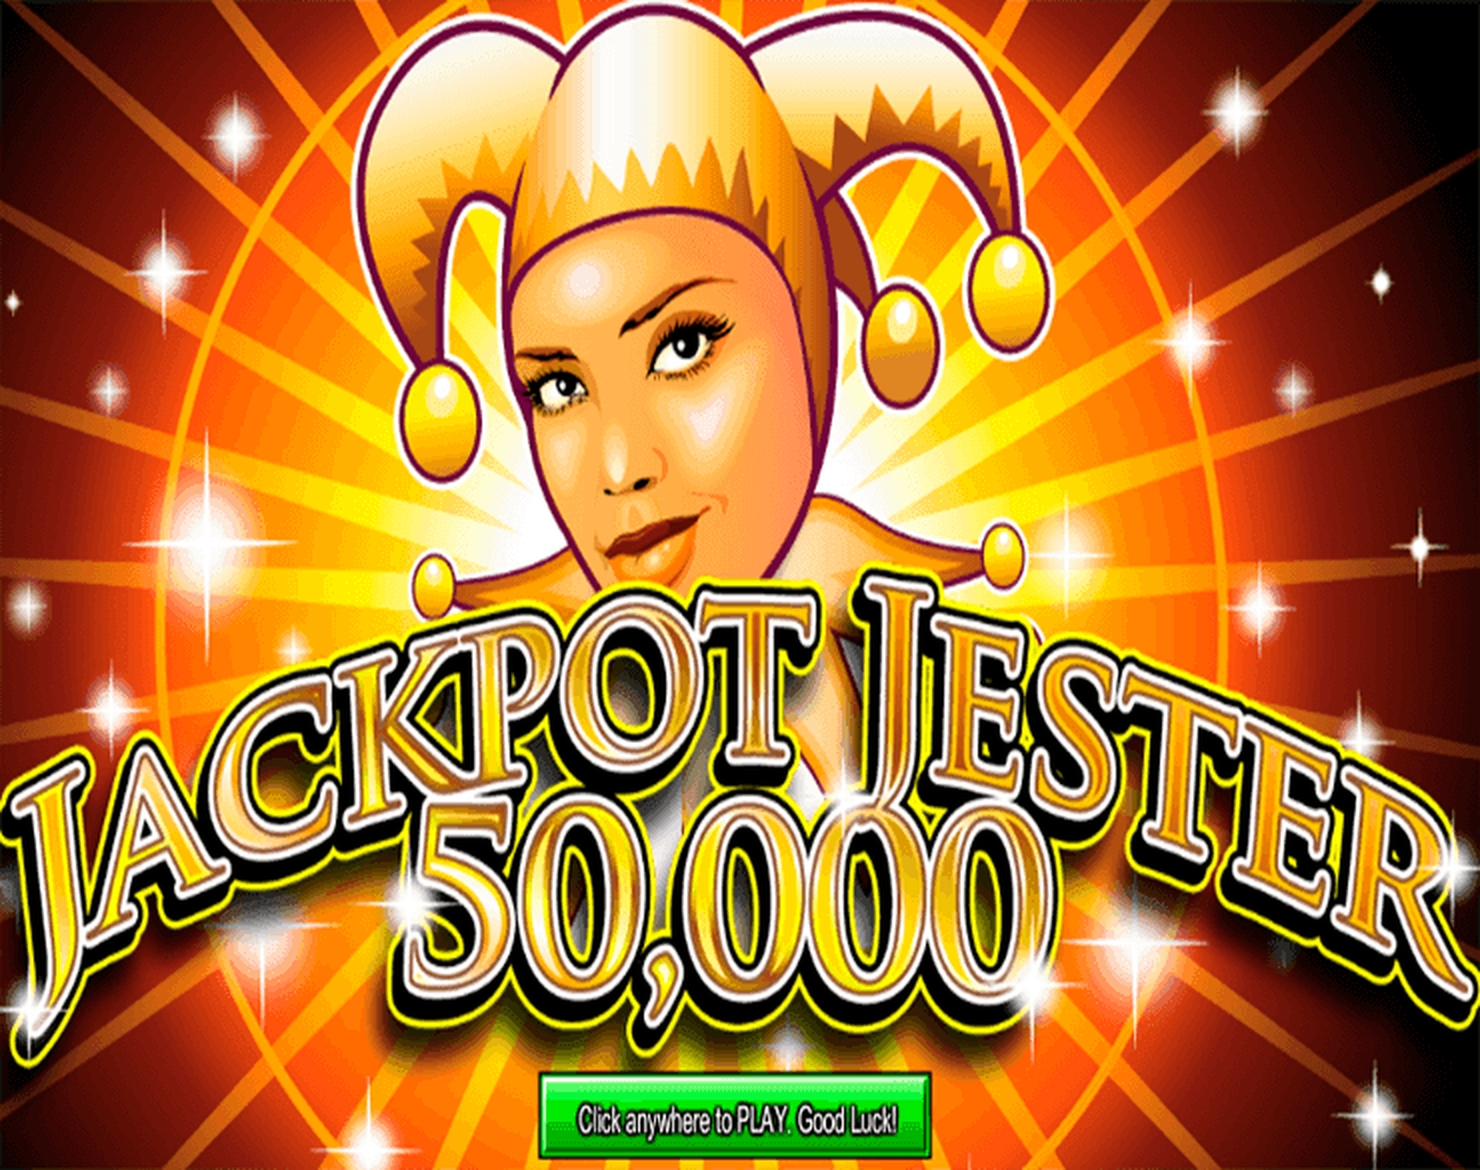 The Jackpot Jester 50,000 Online Slot Demo Game by NextGen Gaming